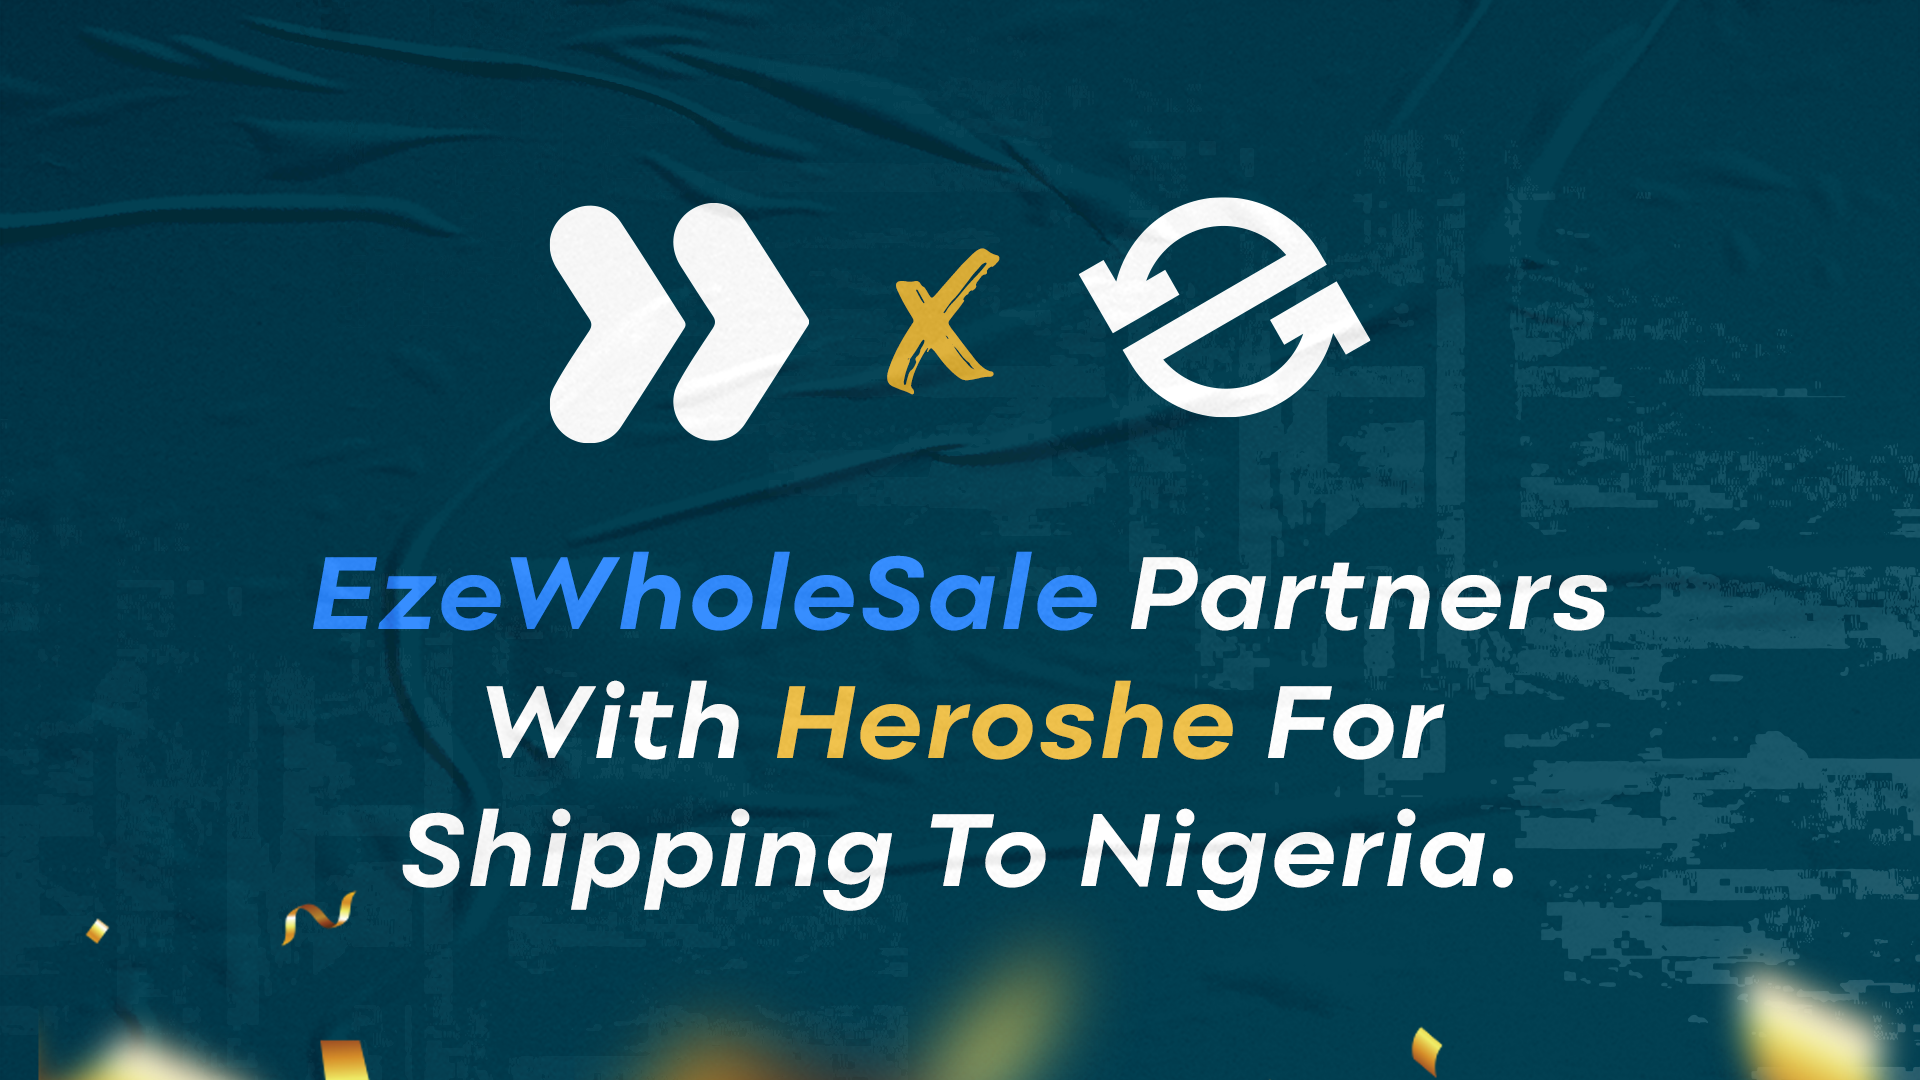 Ezewholesale Partners With Heroshe For Shipping To Nigeria